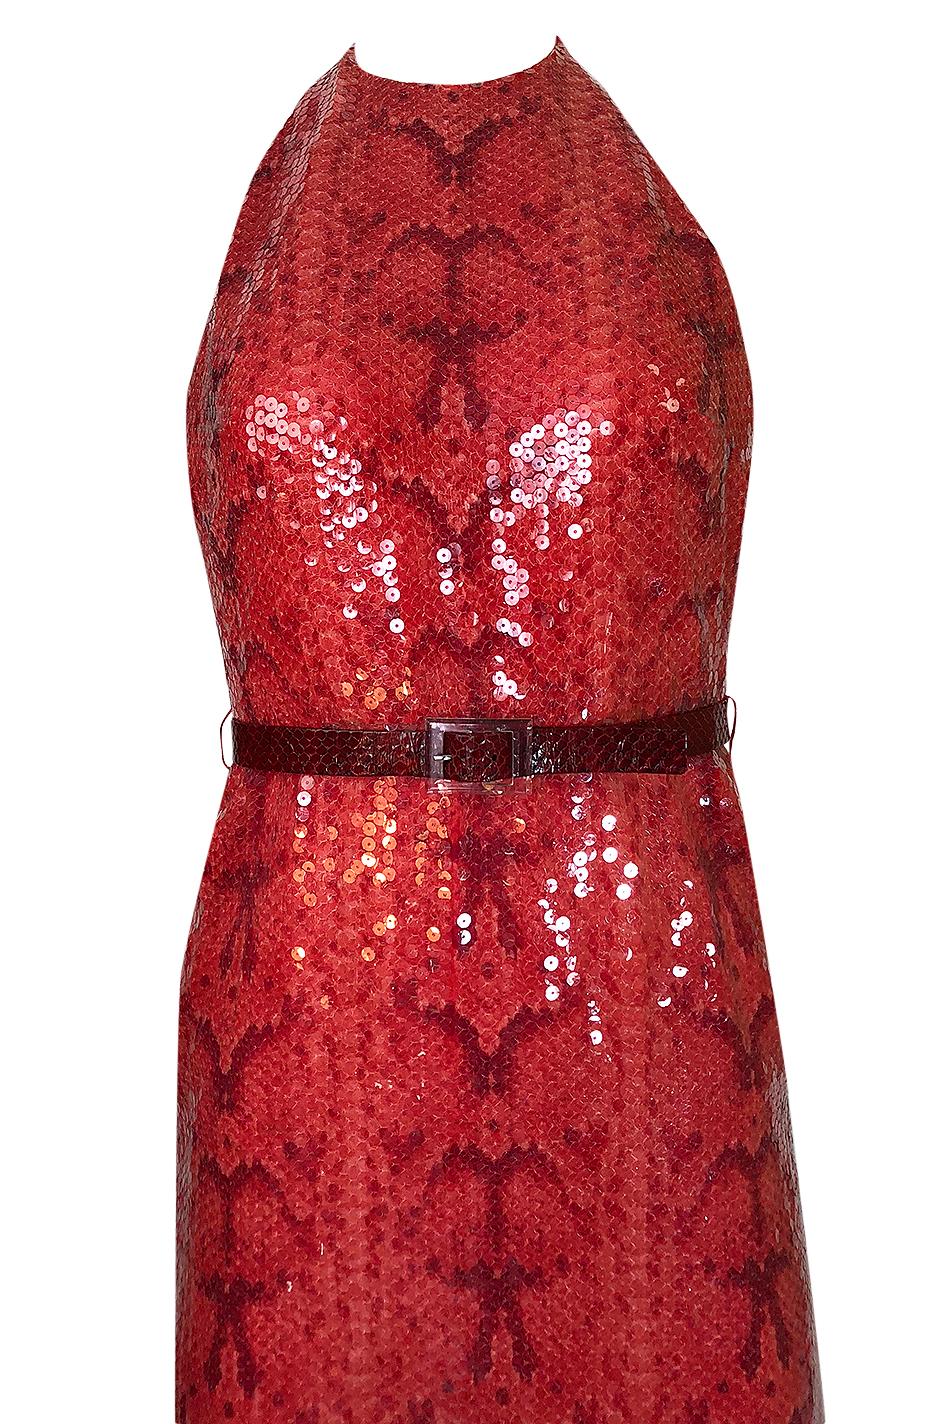 Bill Blass Red Sequin Snakeskin Print Halter Dress, 1974  1